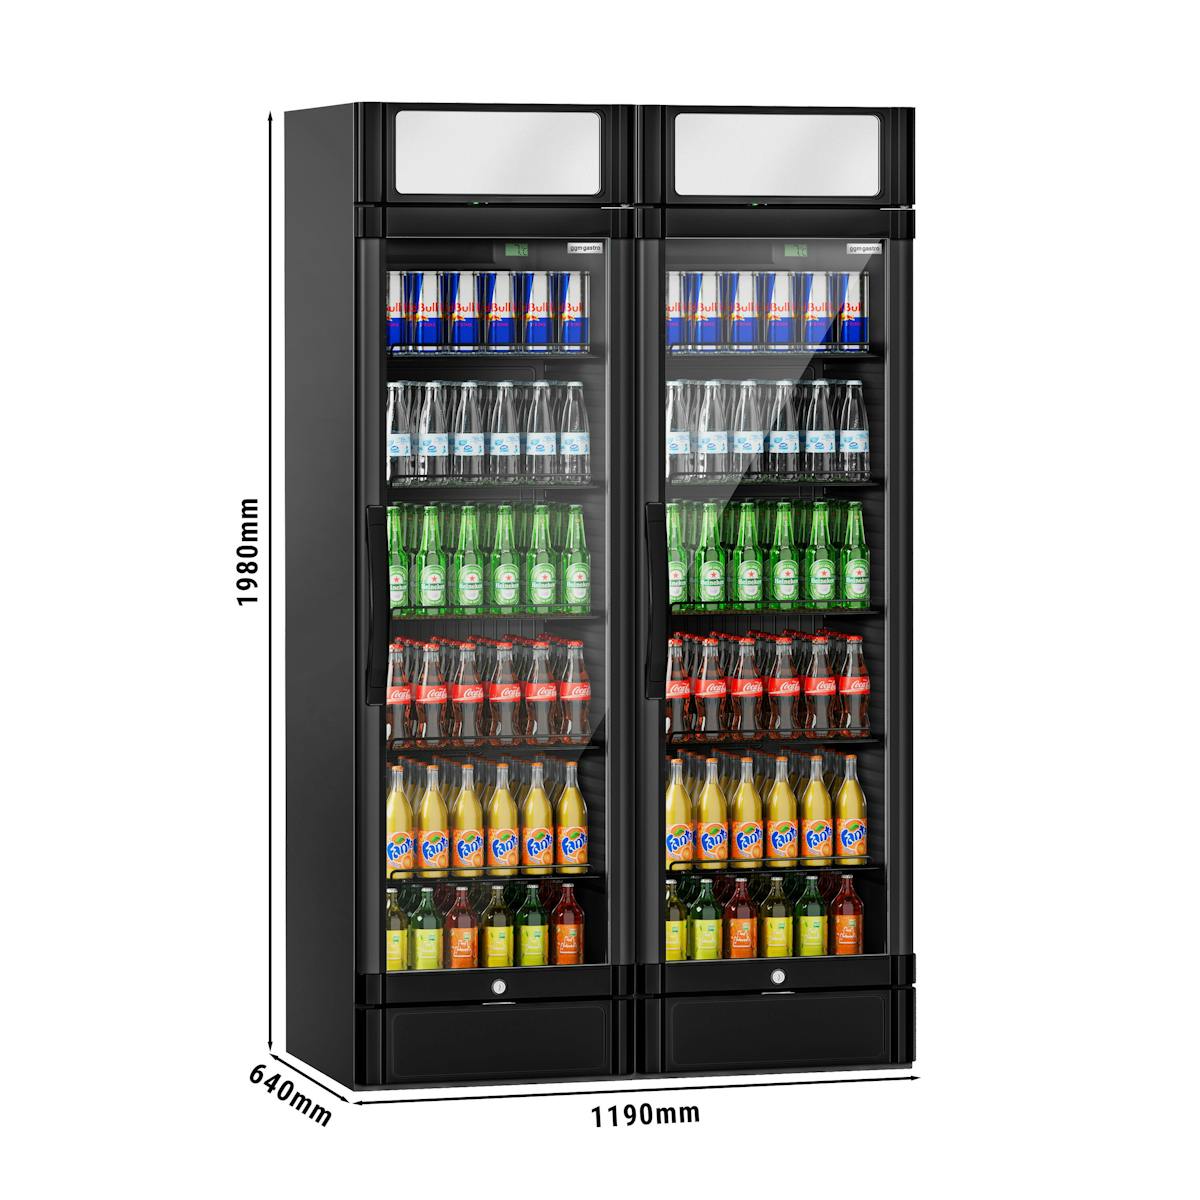 (2 pieces) Beverage refrigerator - 694 litres (total) - black